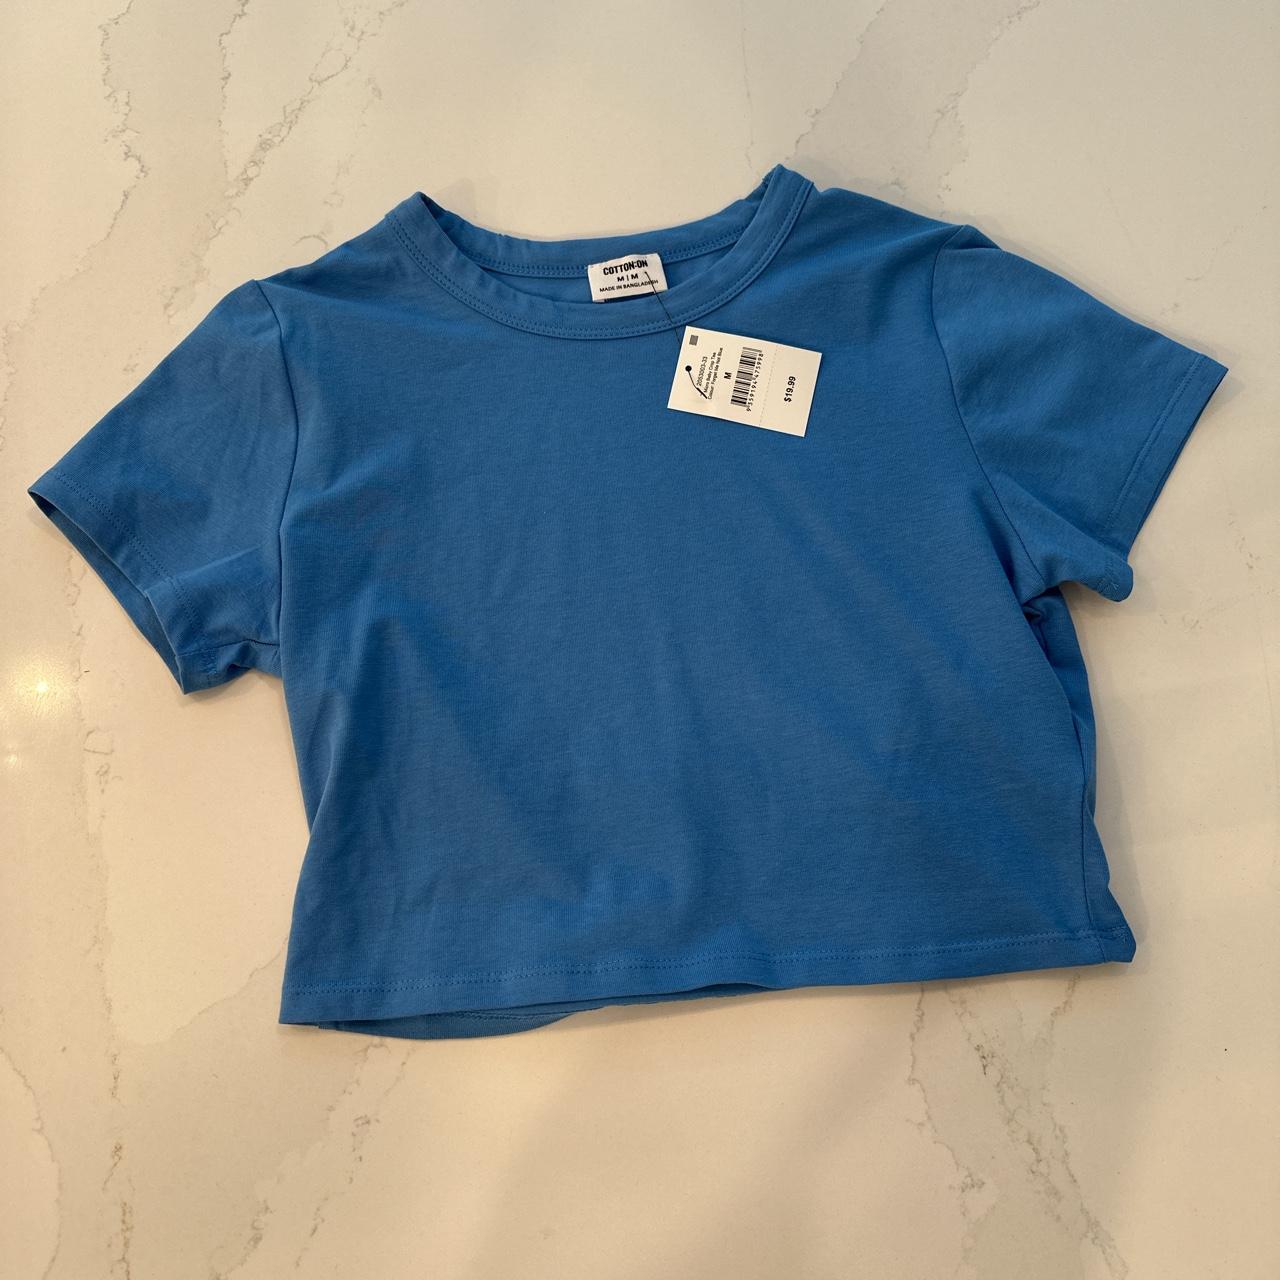 Cotton On Women's Blue T-shirt